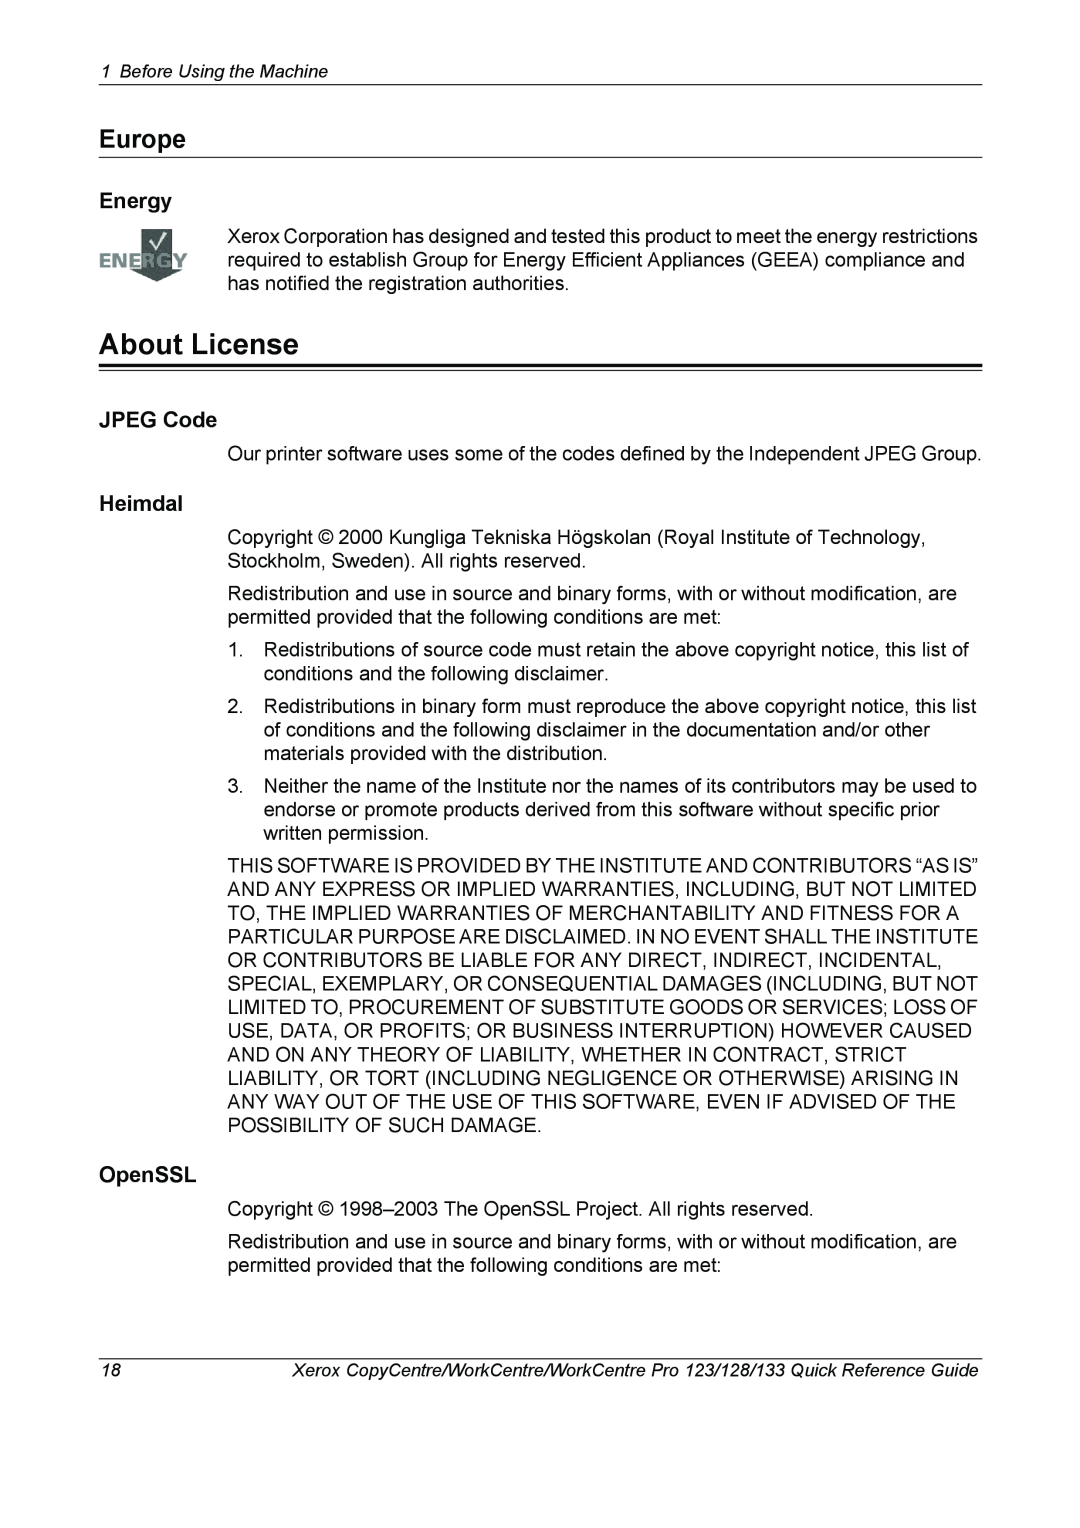 Xerox 604P18037 manual About License, Europe, Energy, JPEG Code, Heimdal, OpenSSL 